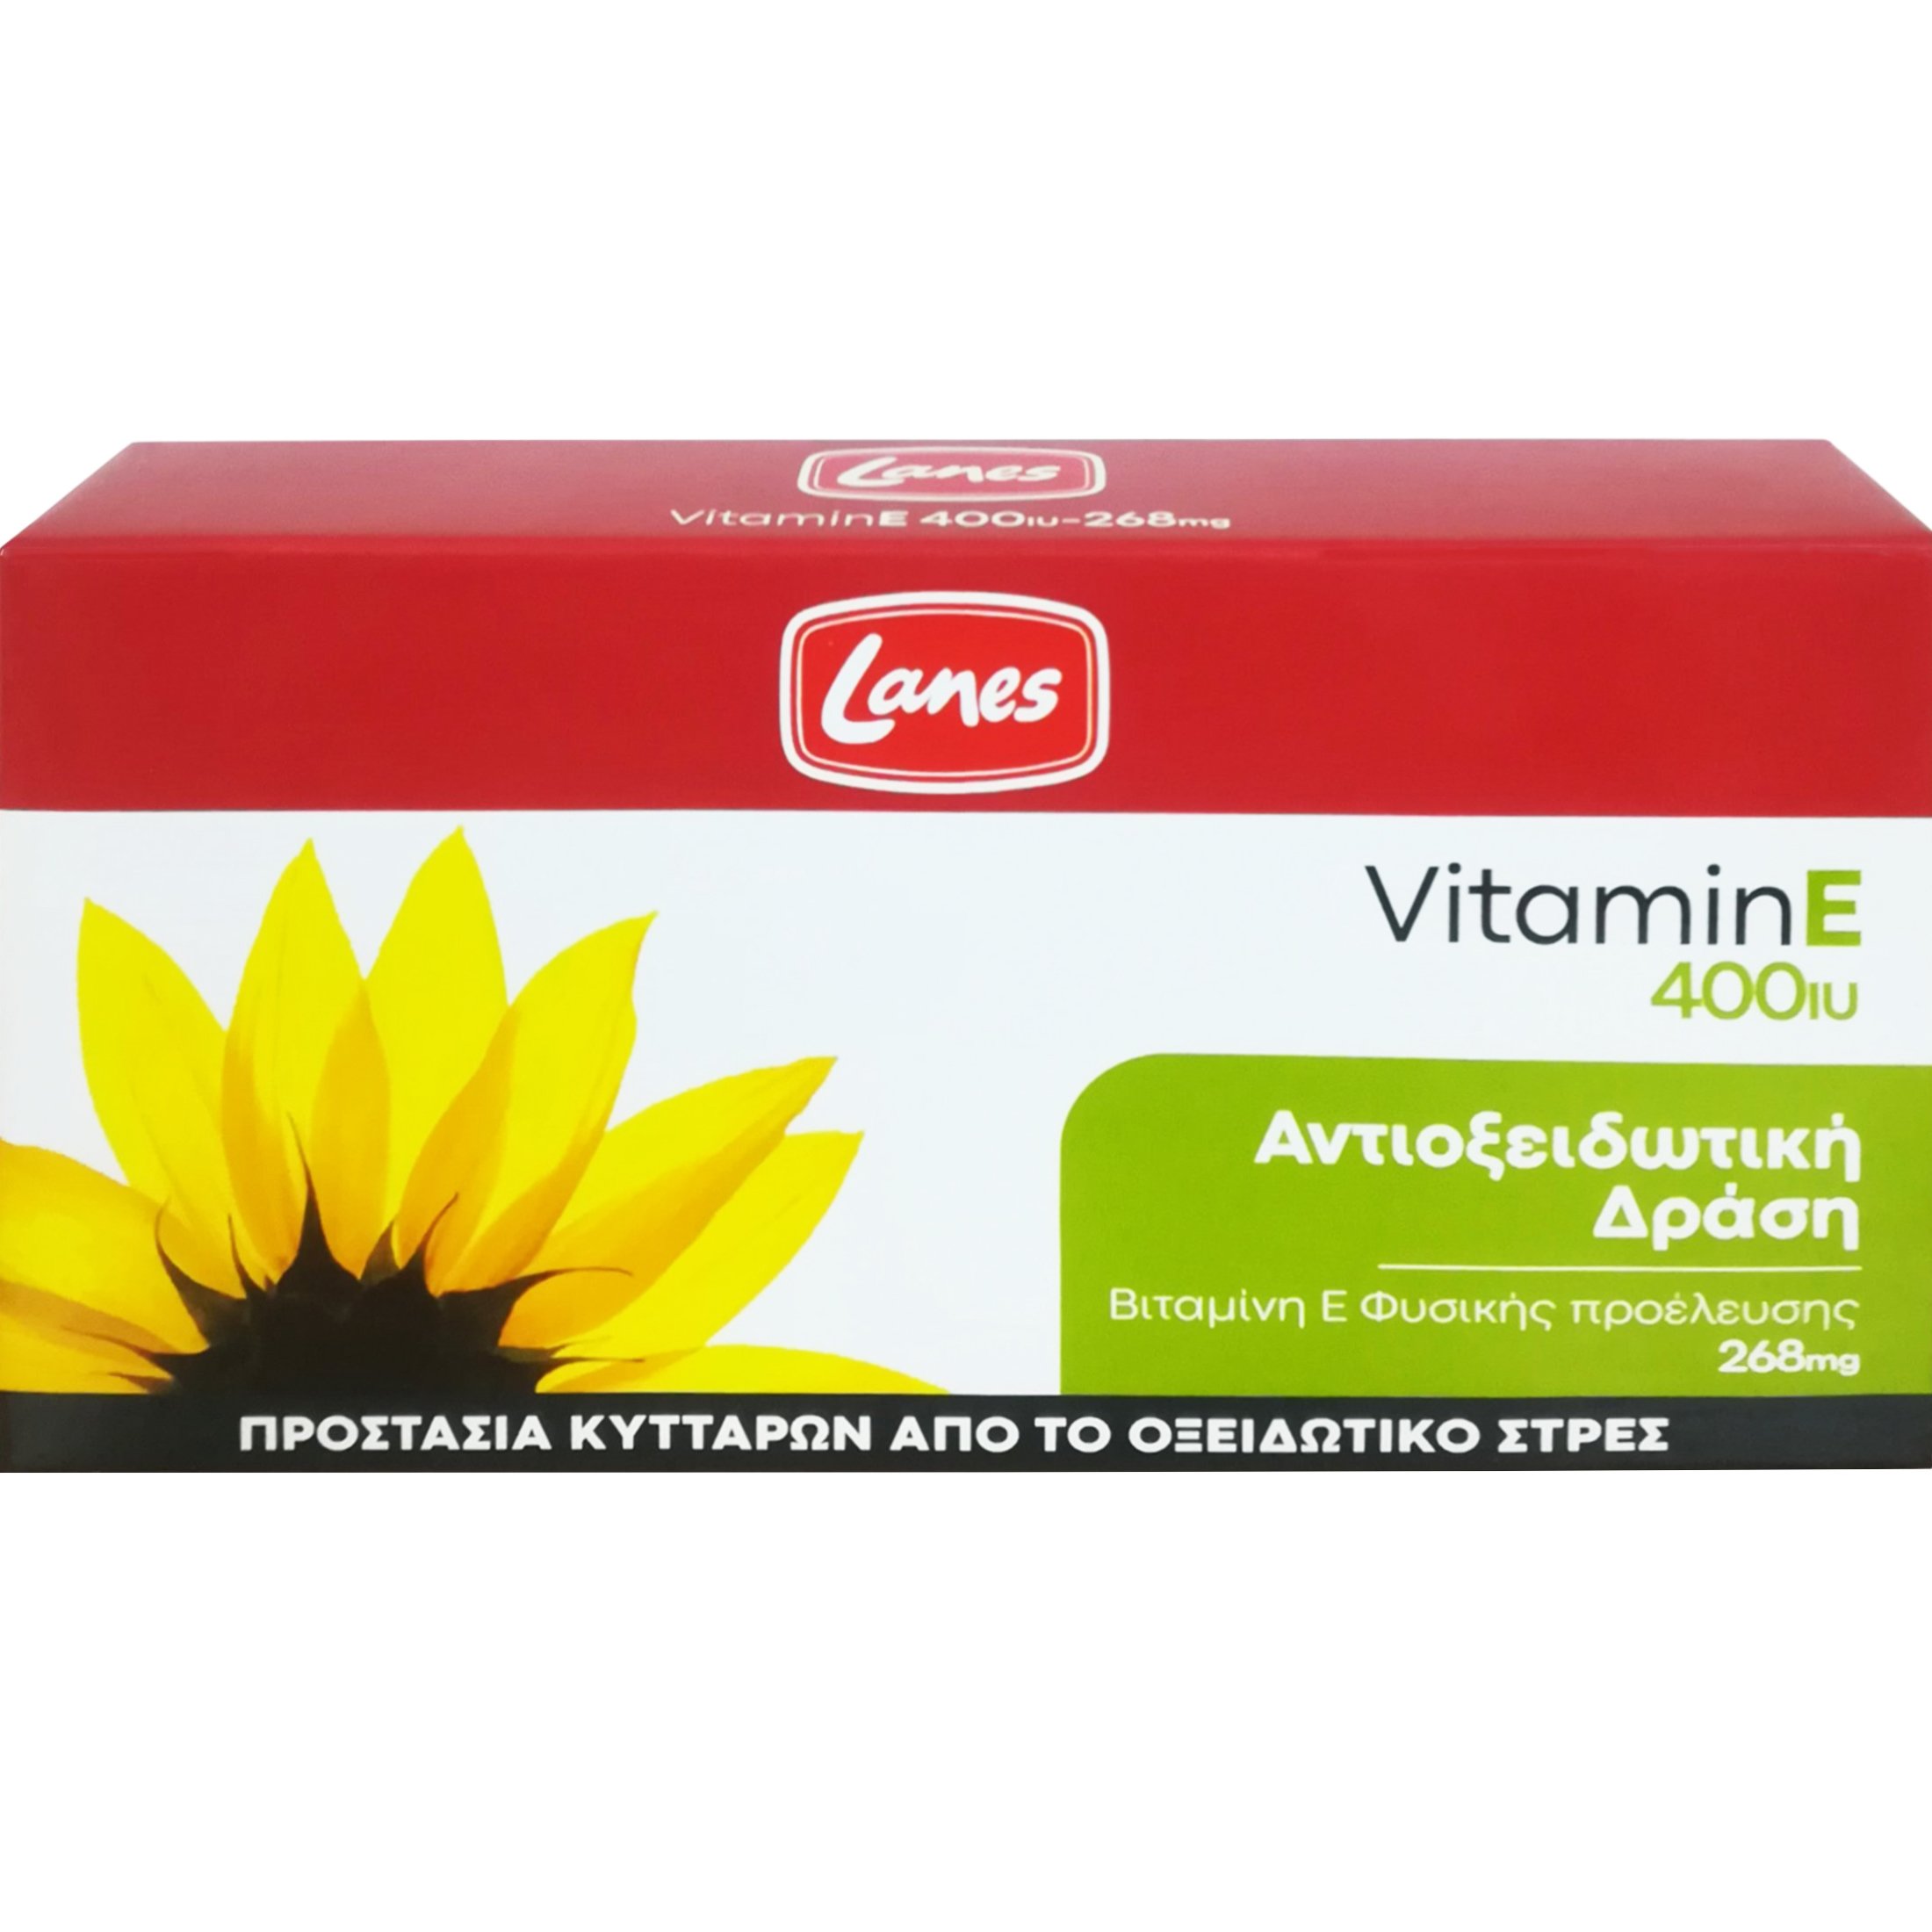 Lanes Vitamin E 400iu Συμπλήρωμα Διατροφής με Βιταμίνη Ε για την Καλή Υγεία του Δέρματος & της Καρδιάς με Αντιοξειδωτικές Ιδιότητες 30caps 6870